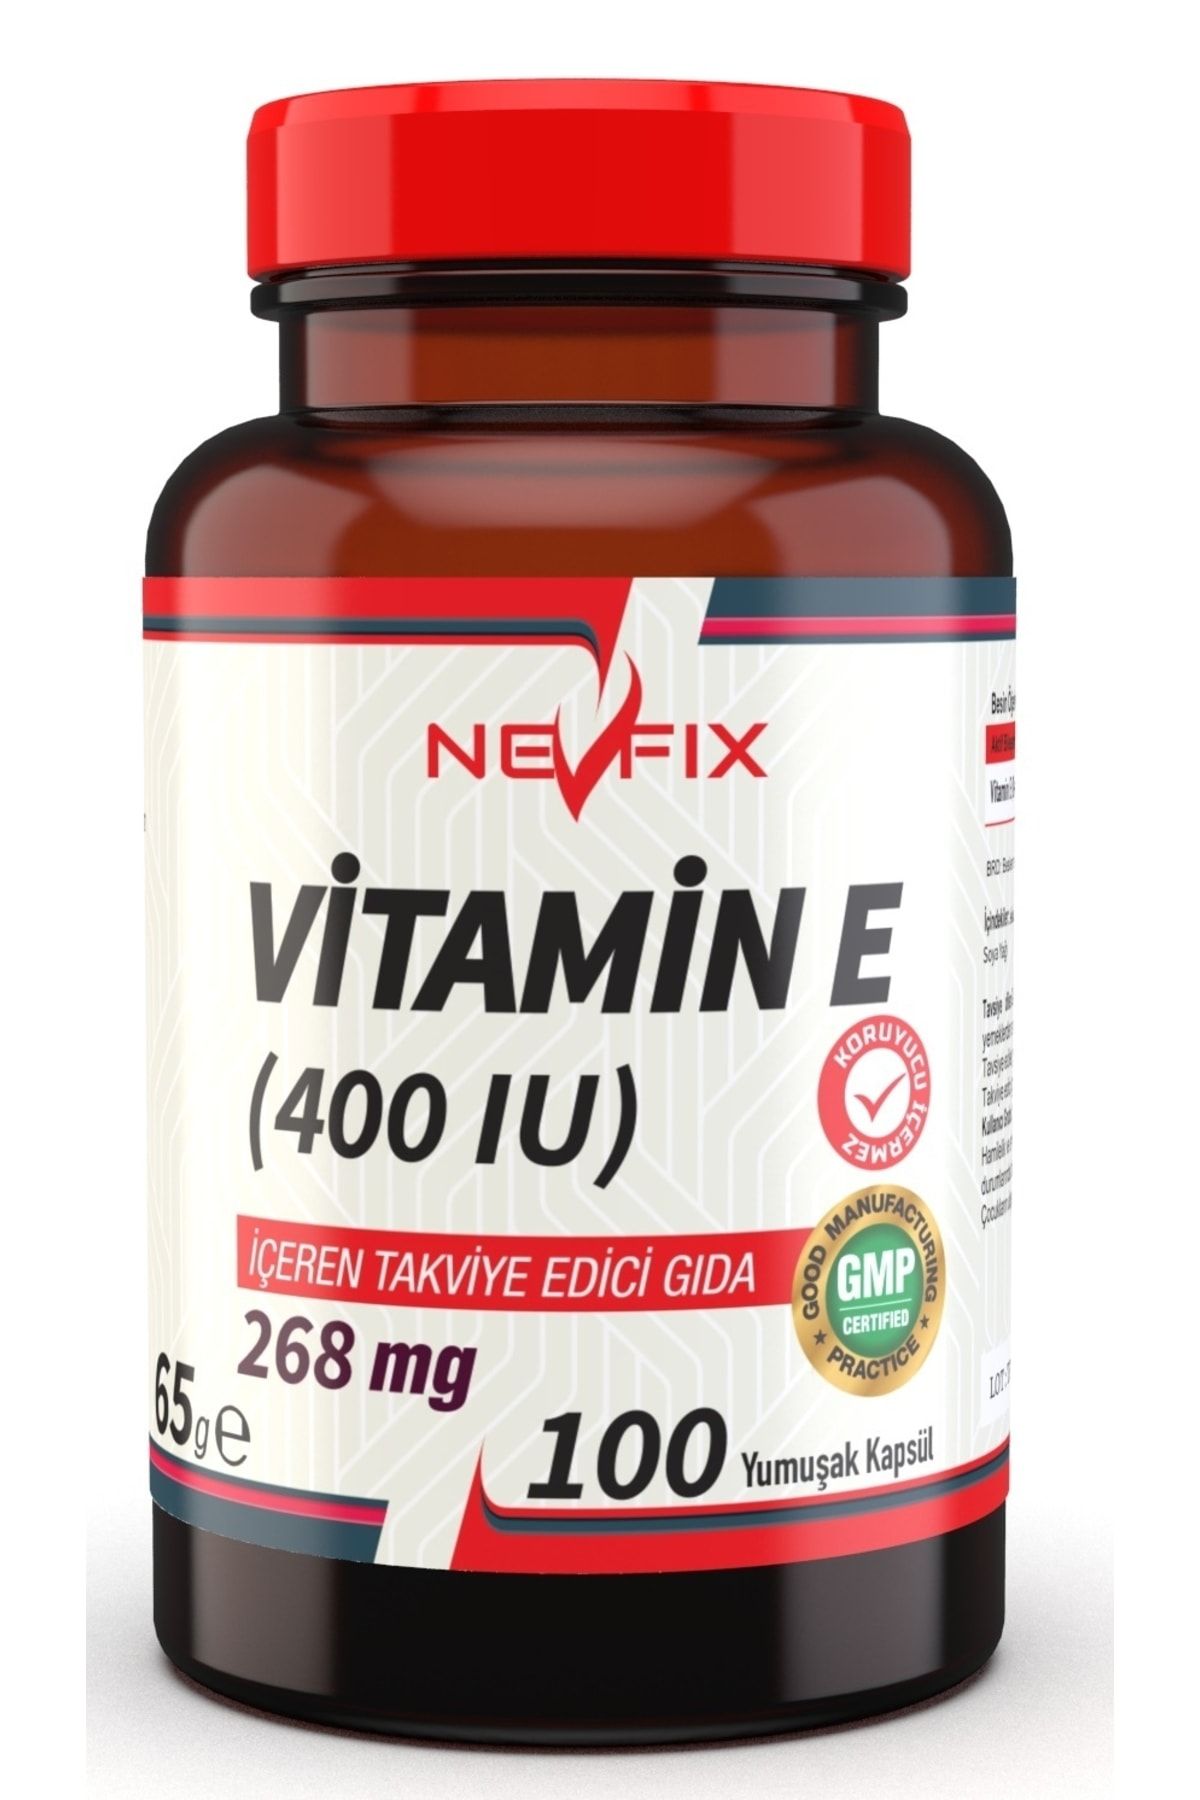 Nevfix Vitamin E 400 Iu (268 Mg) 100 Yumuşak Kapsül